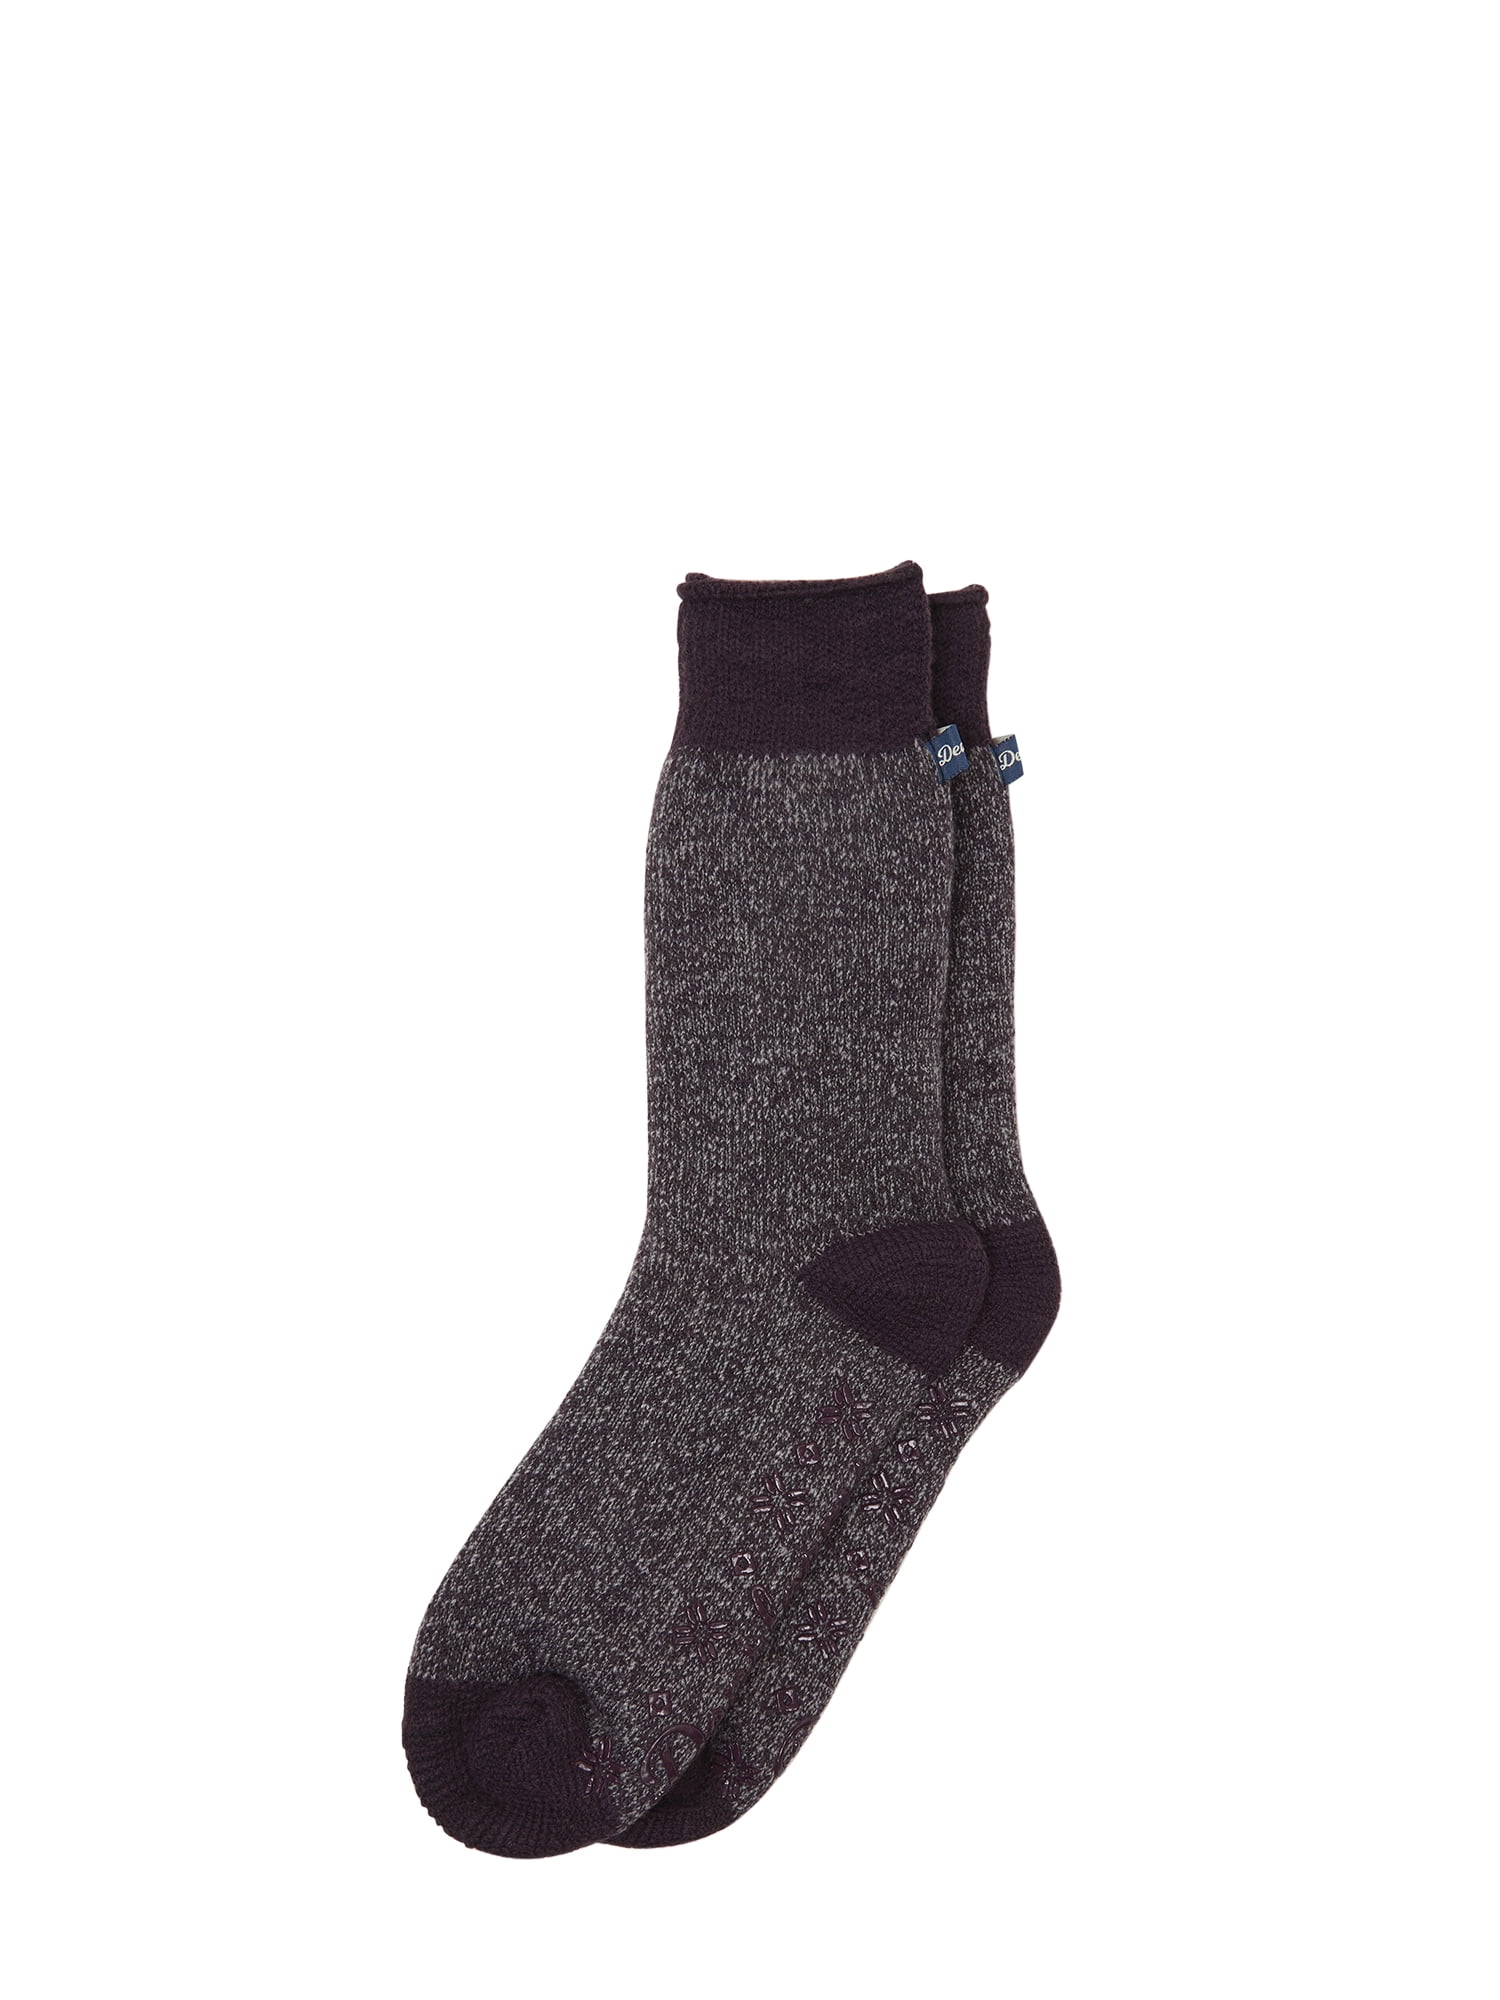 Dearfoams Heathered Knit Cabin Slipper Socks - Walmart.com